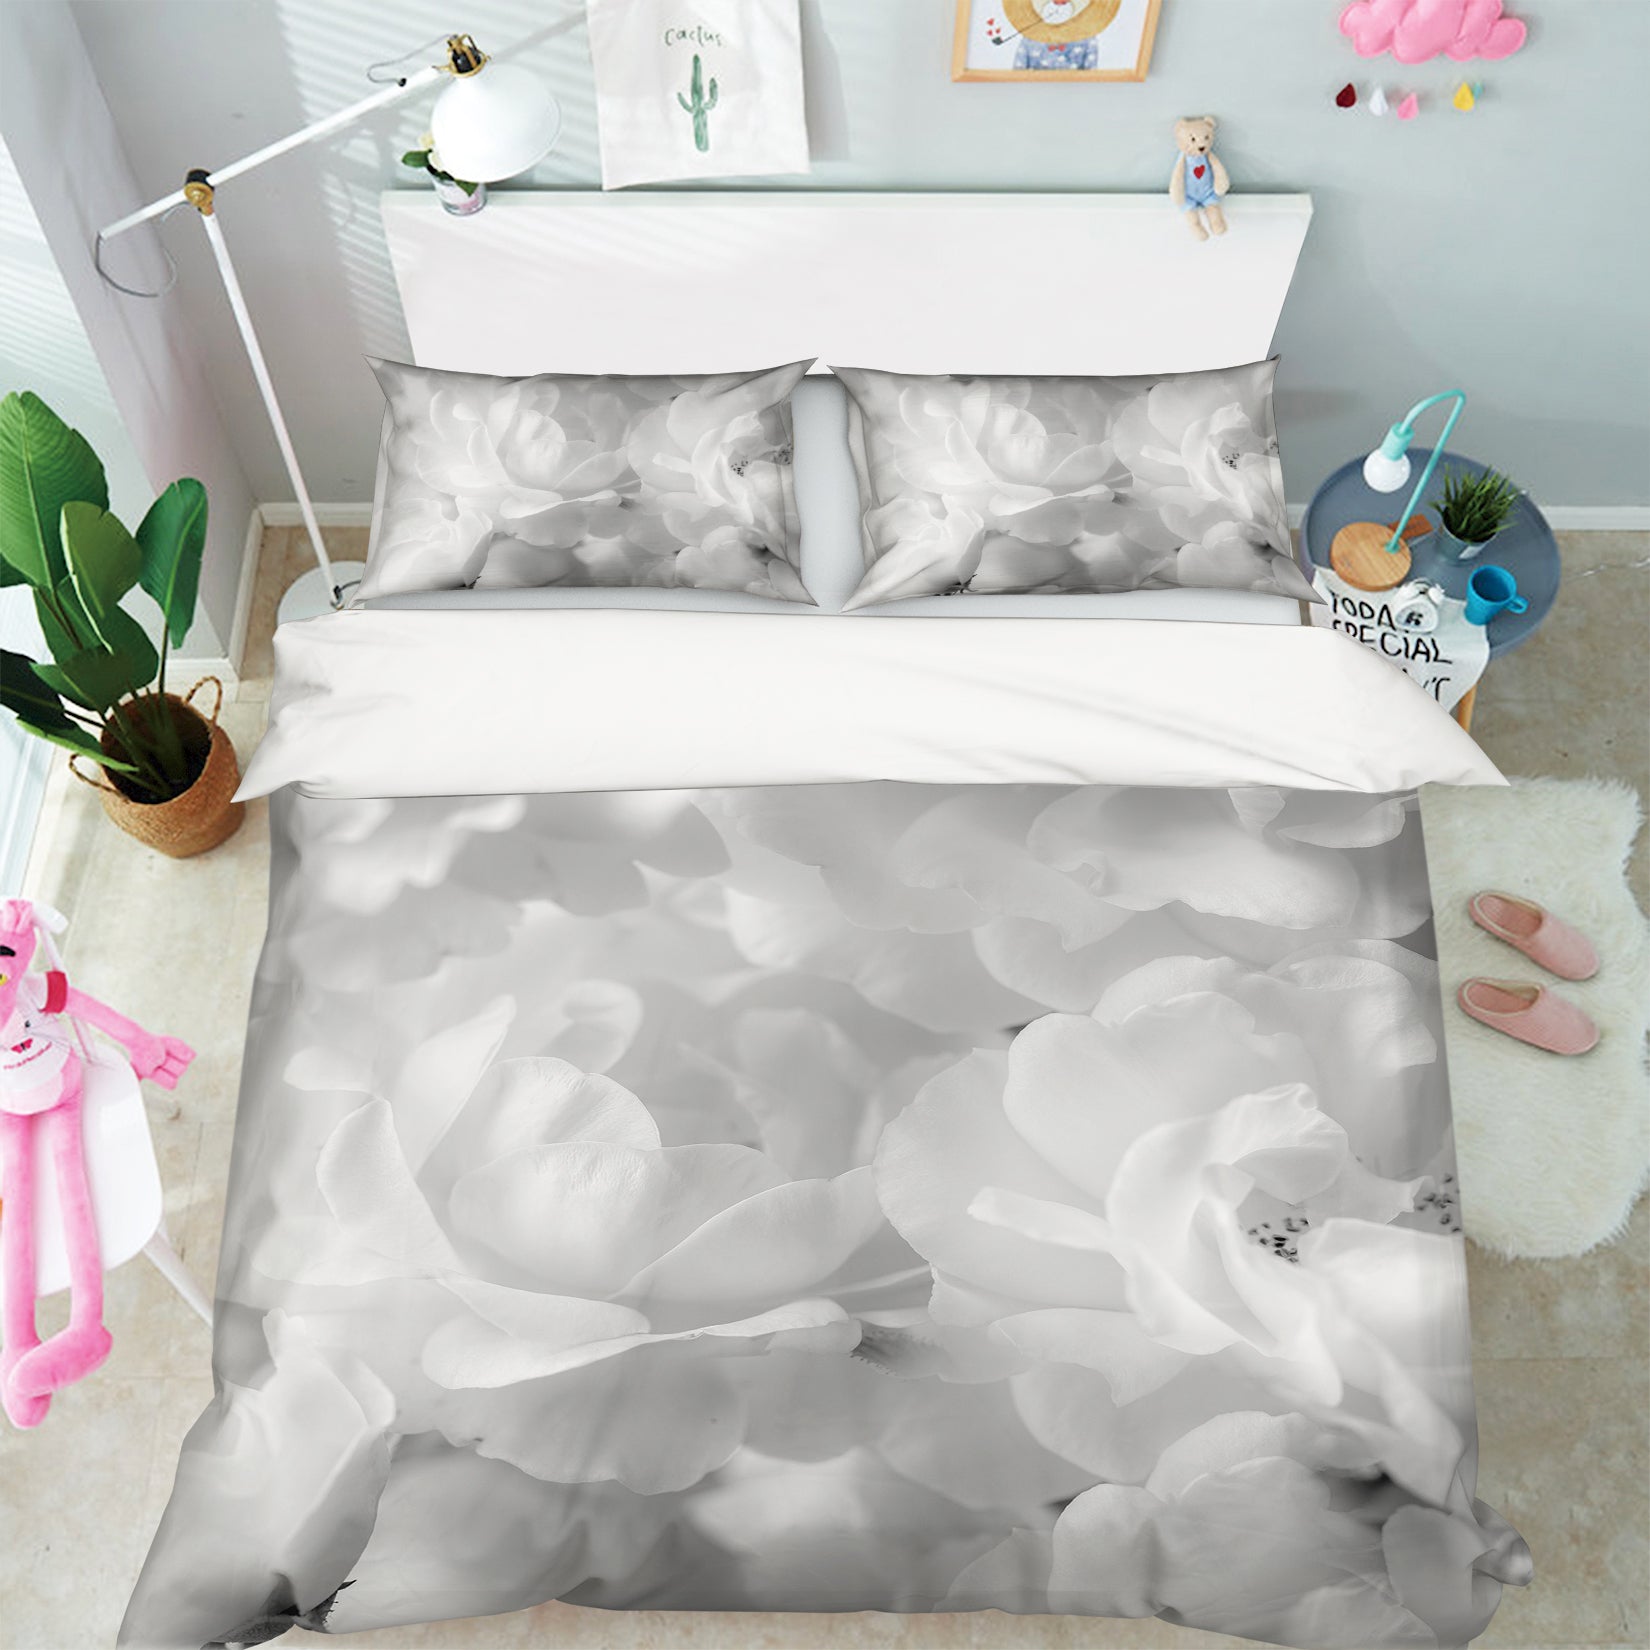 3D Petal Art 7152 Assaf Frank Bedding Bed Pillowcases Quilt Cover Duvet Cover